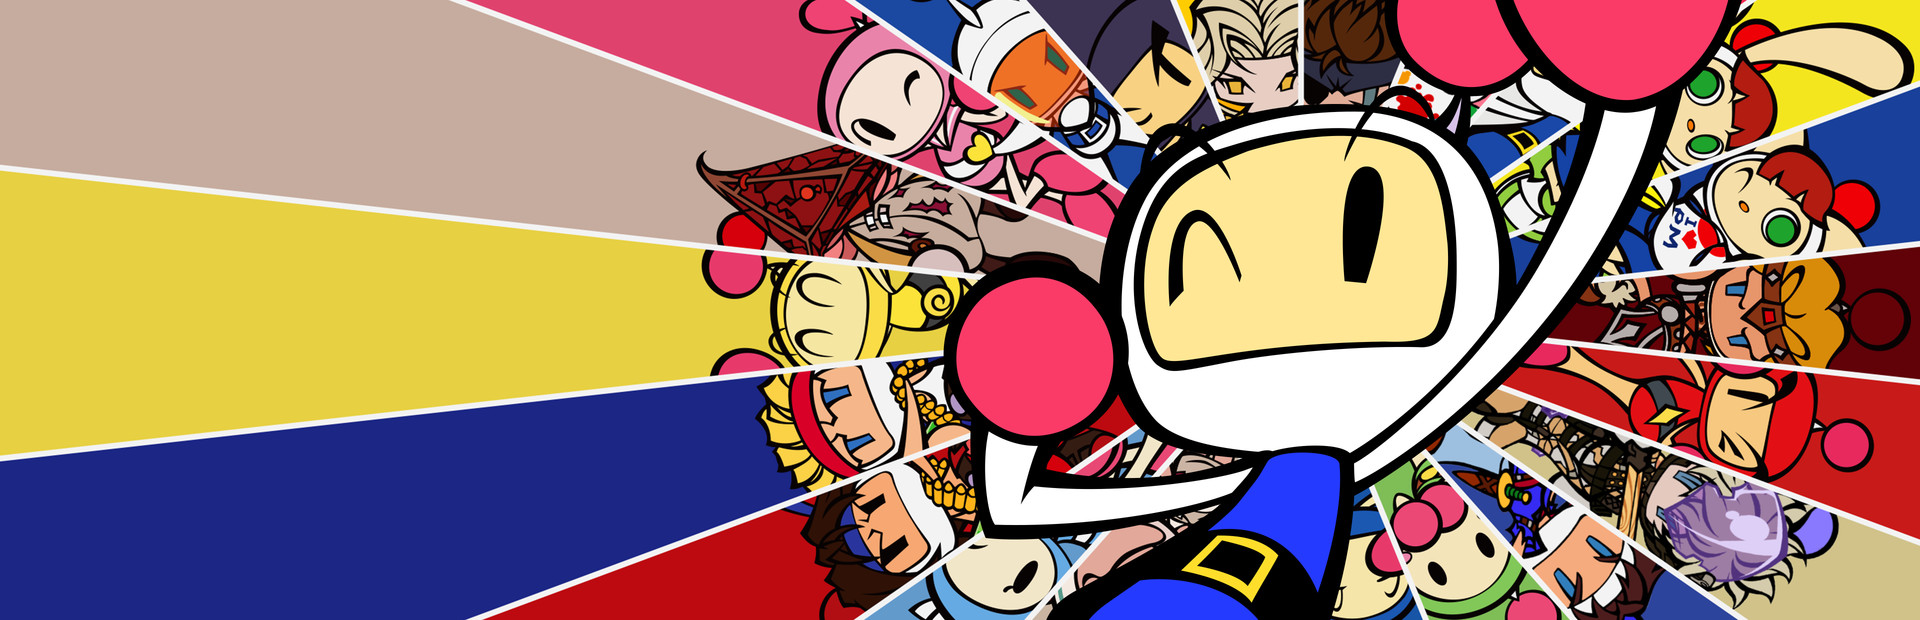 Super Bomberman R Online cover image